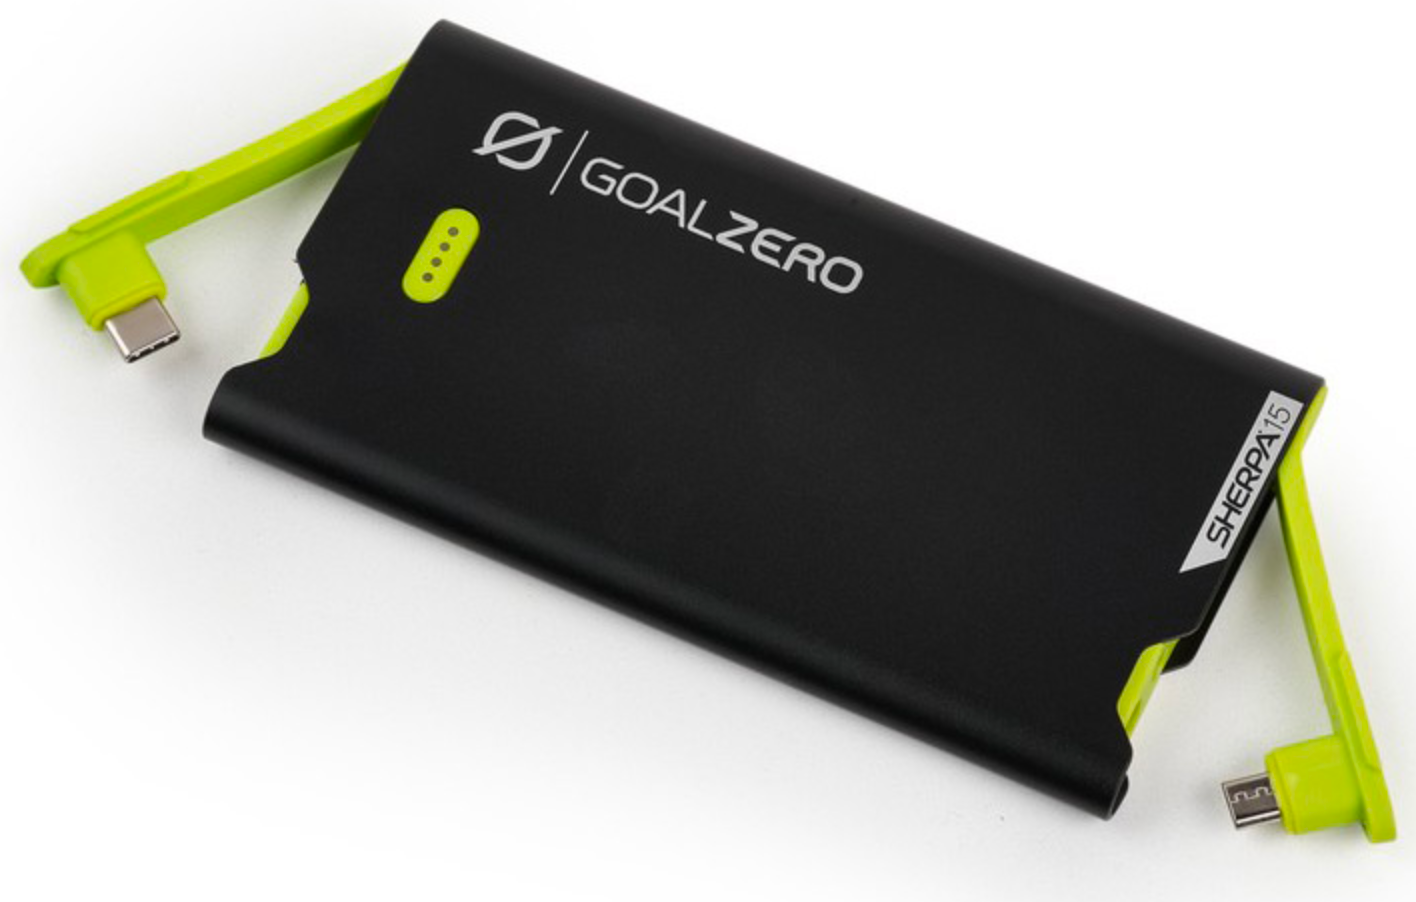 Goal Zero Sherpa 15 Micro/USB-C Battery